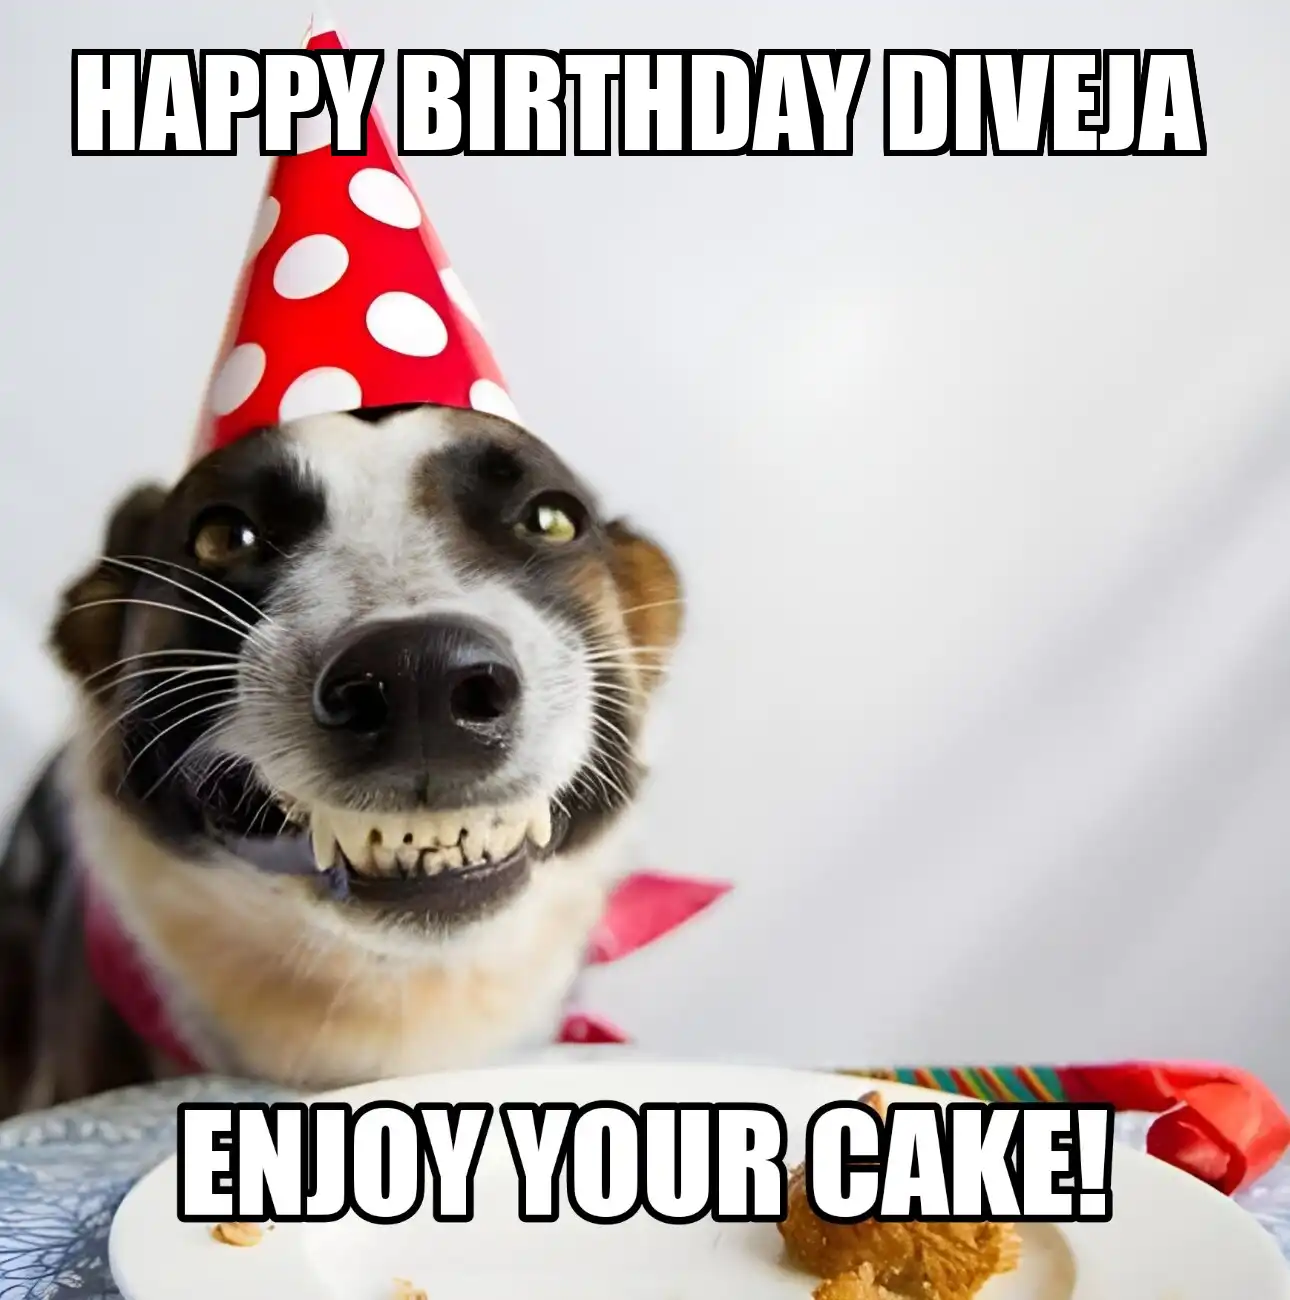 Happy Birthday Diveja Enjoy Your Cake Dog Meme